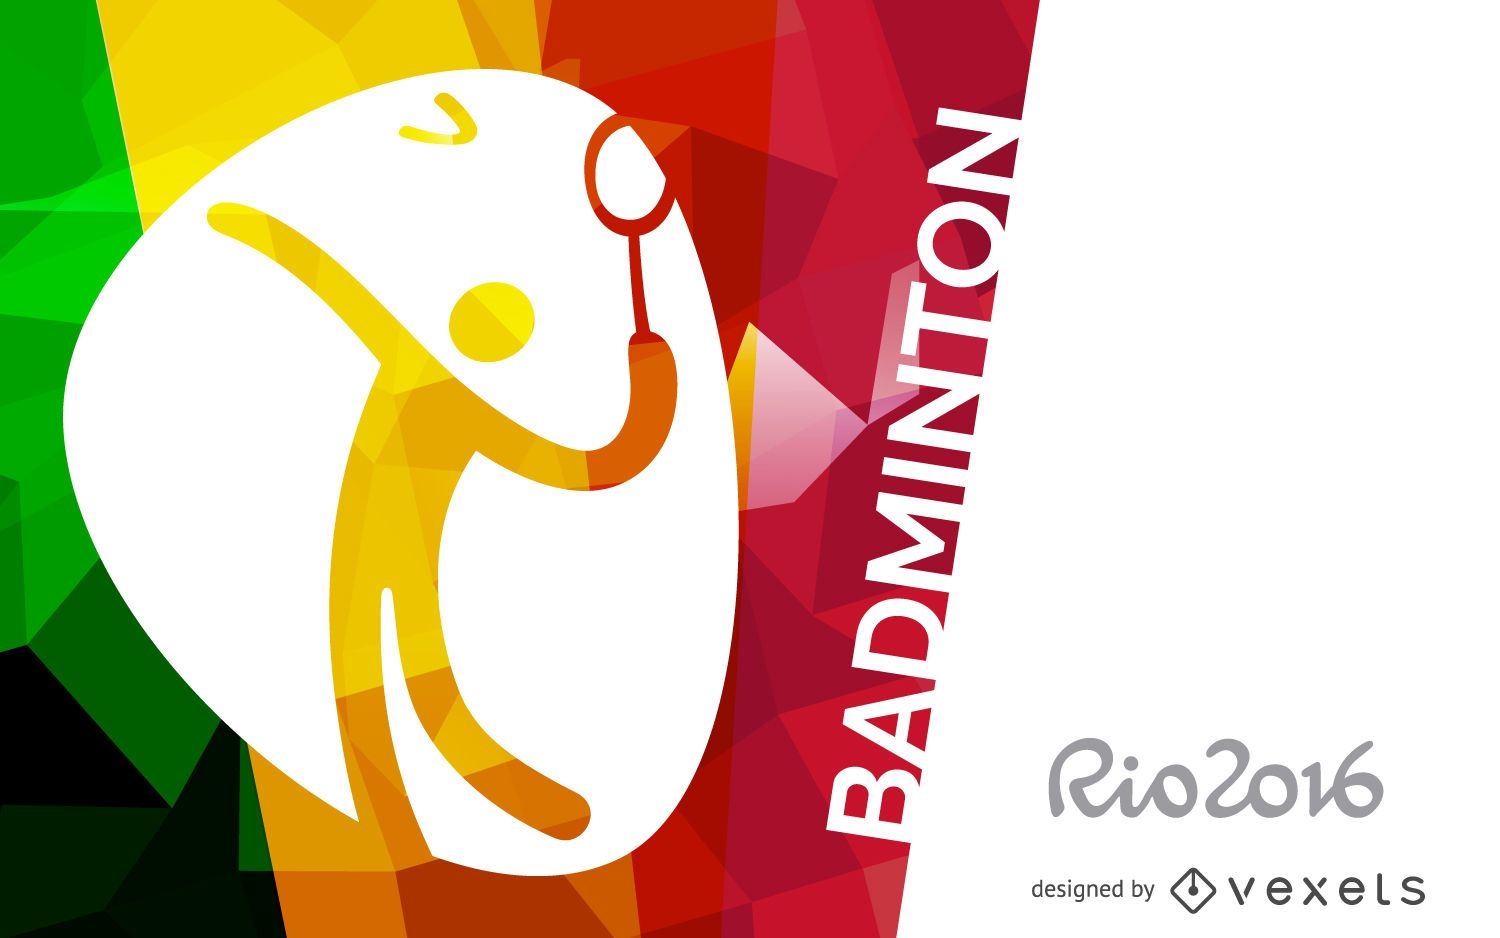 Rio 2016 badminton